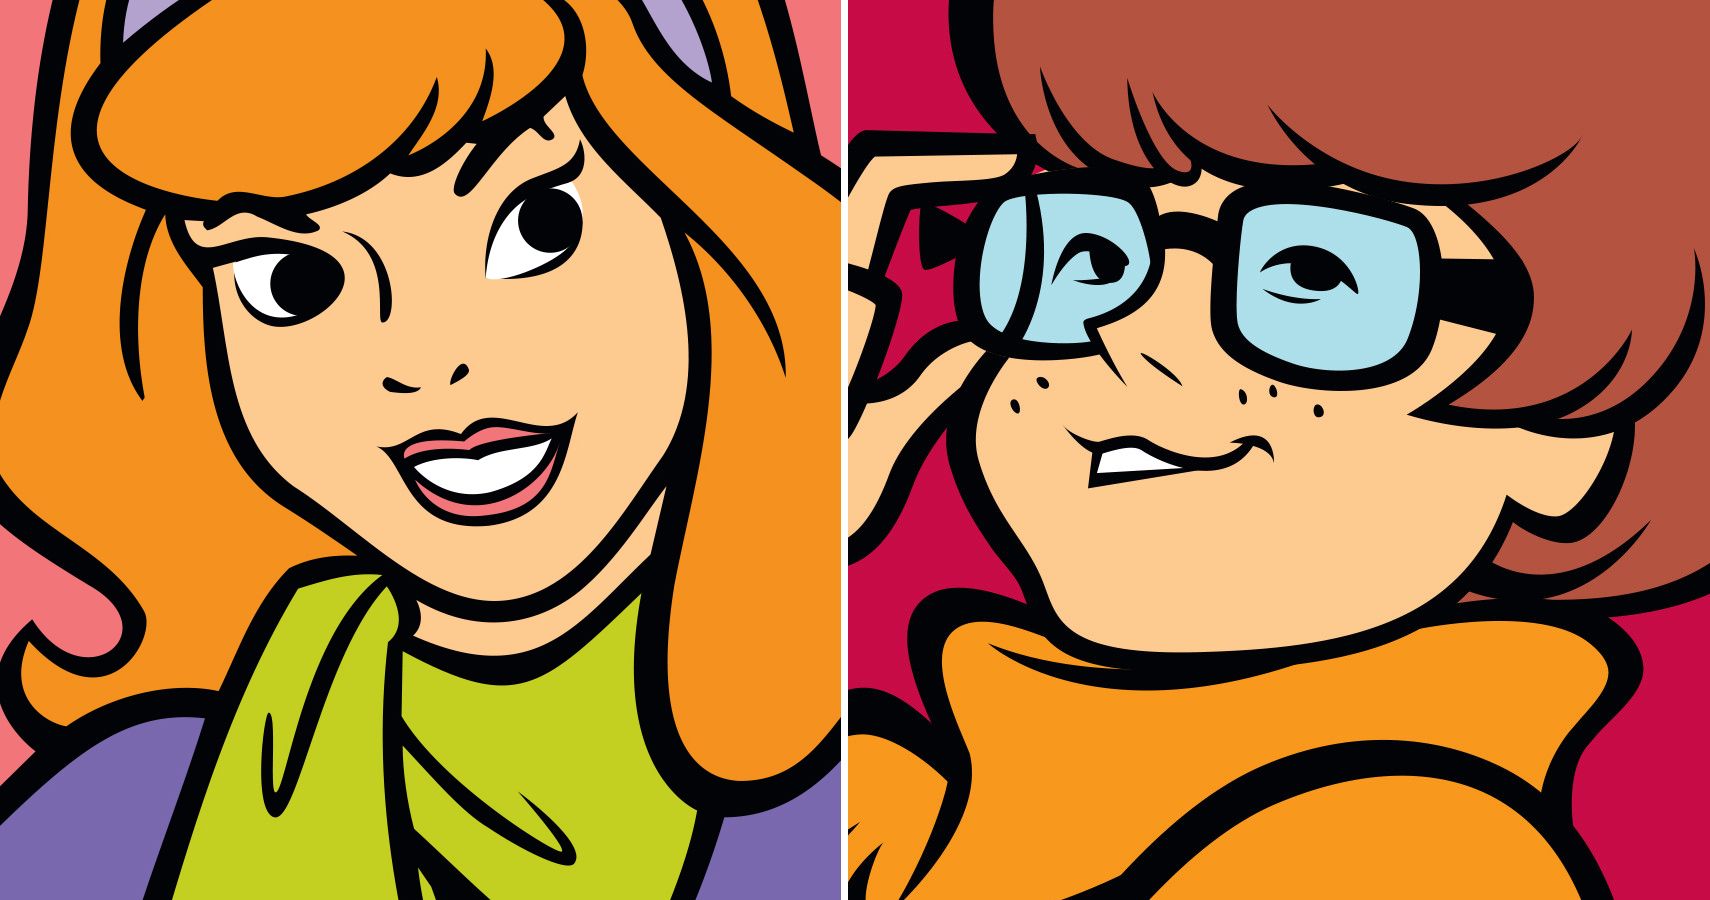 Daphne & Velma  Scooby doo pictures, Velma scooby doo, Daphne and velma